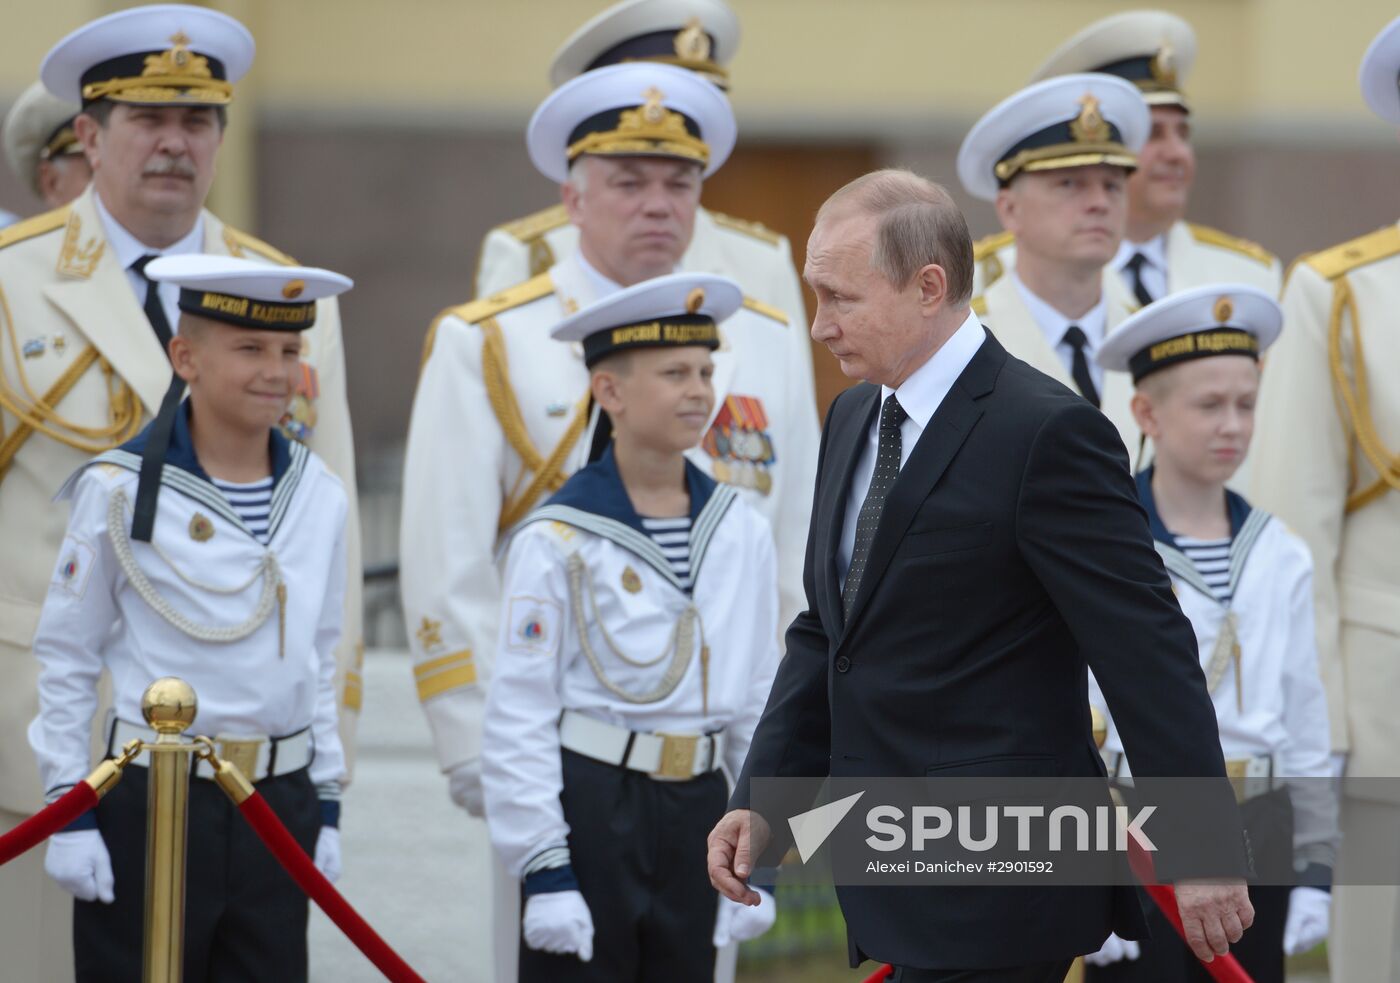 Russian President Vladimir Putin takes part in celebrating Nay Day in St. Petersburg